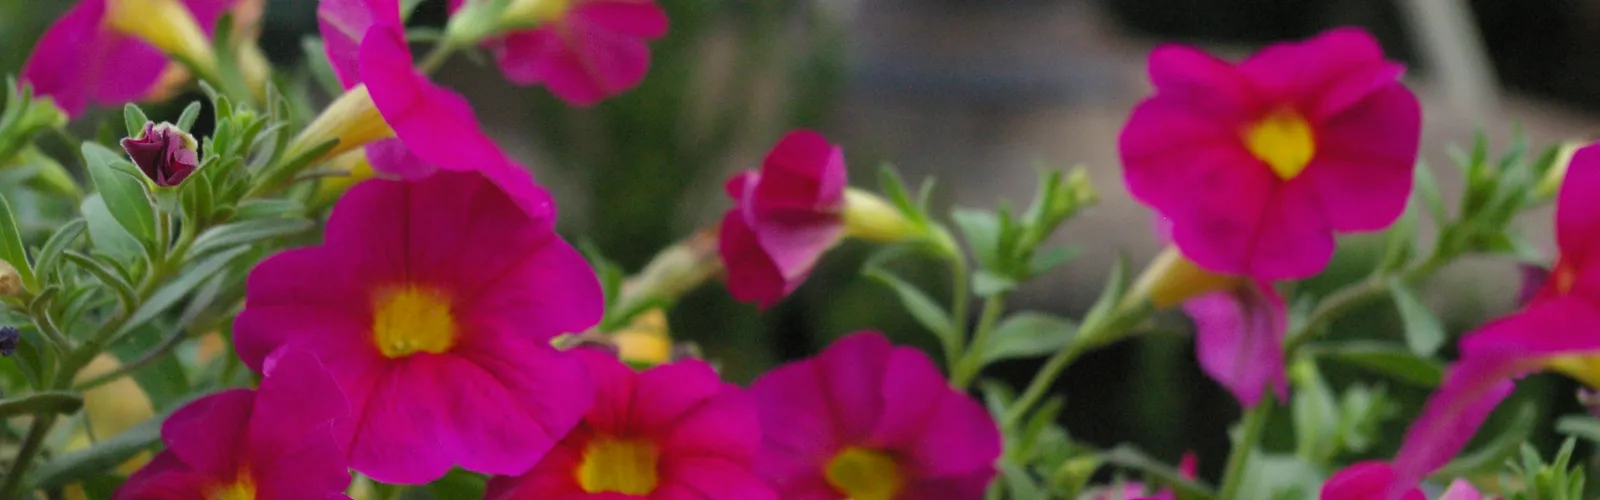 pink calibrachoa flowers